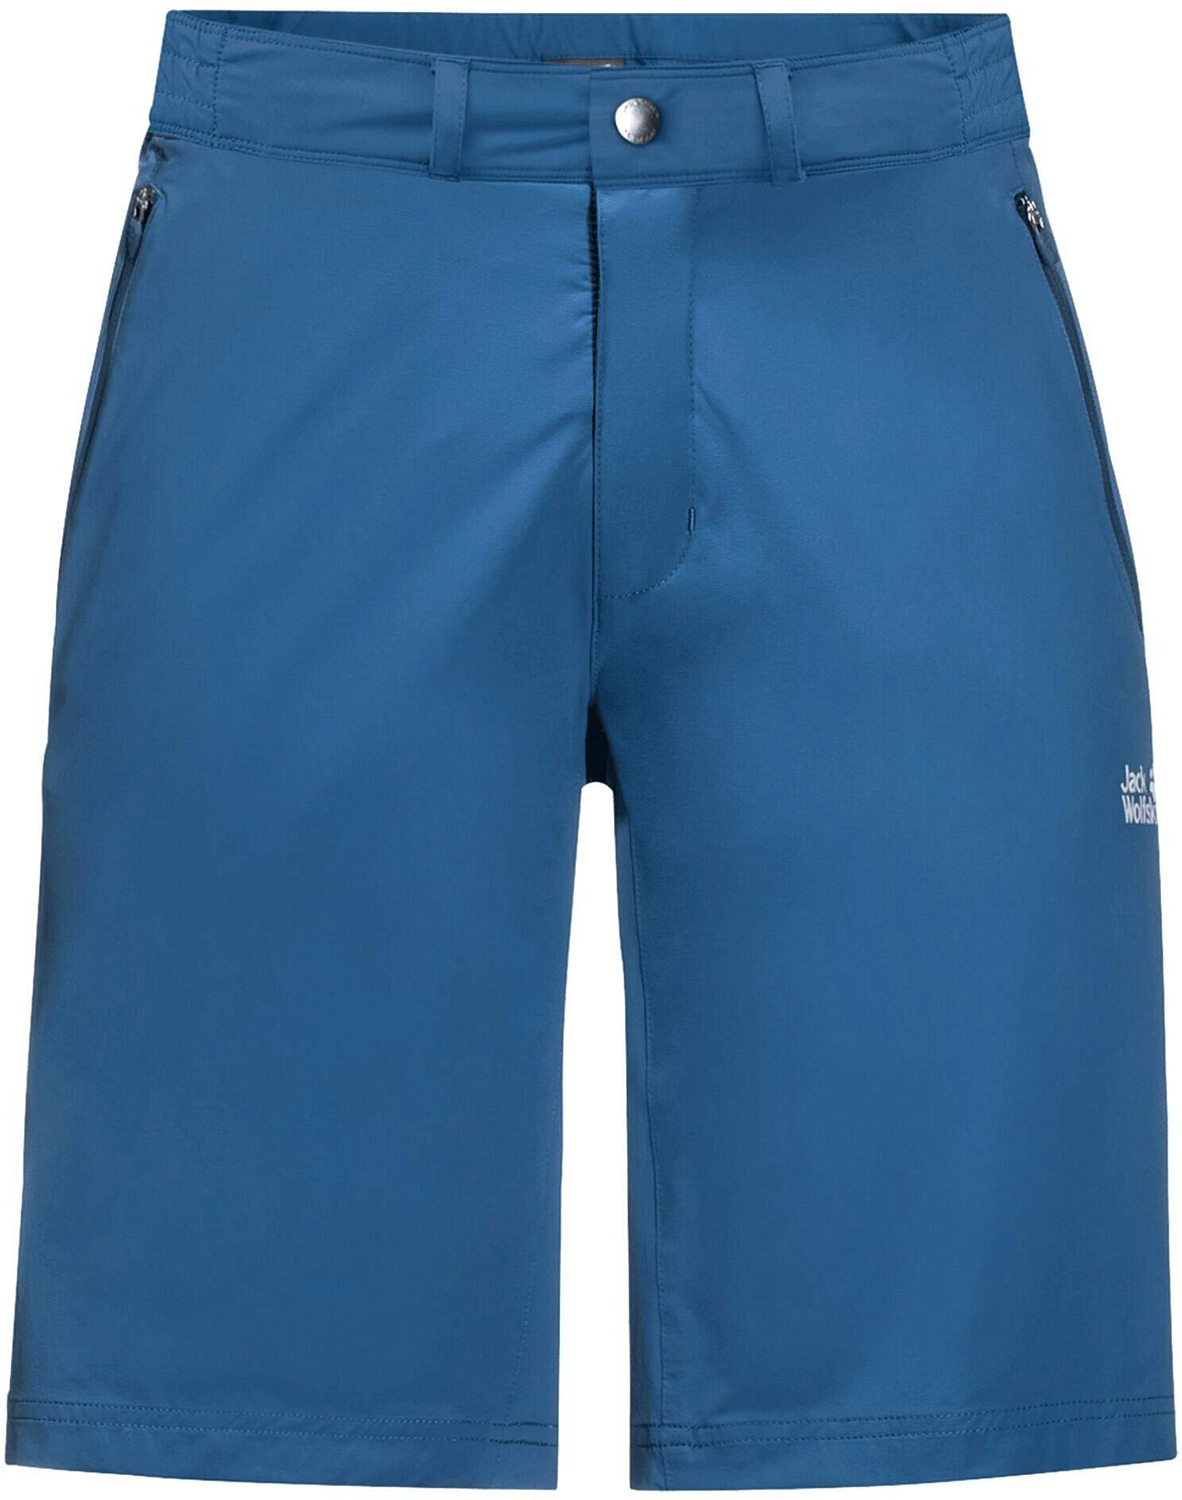 Шорты для активного отдыха Jack Wolfskin 2020 Delta Shorts M Indigo Blue